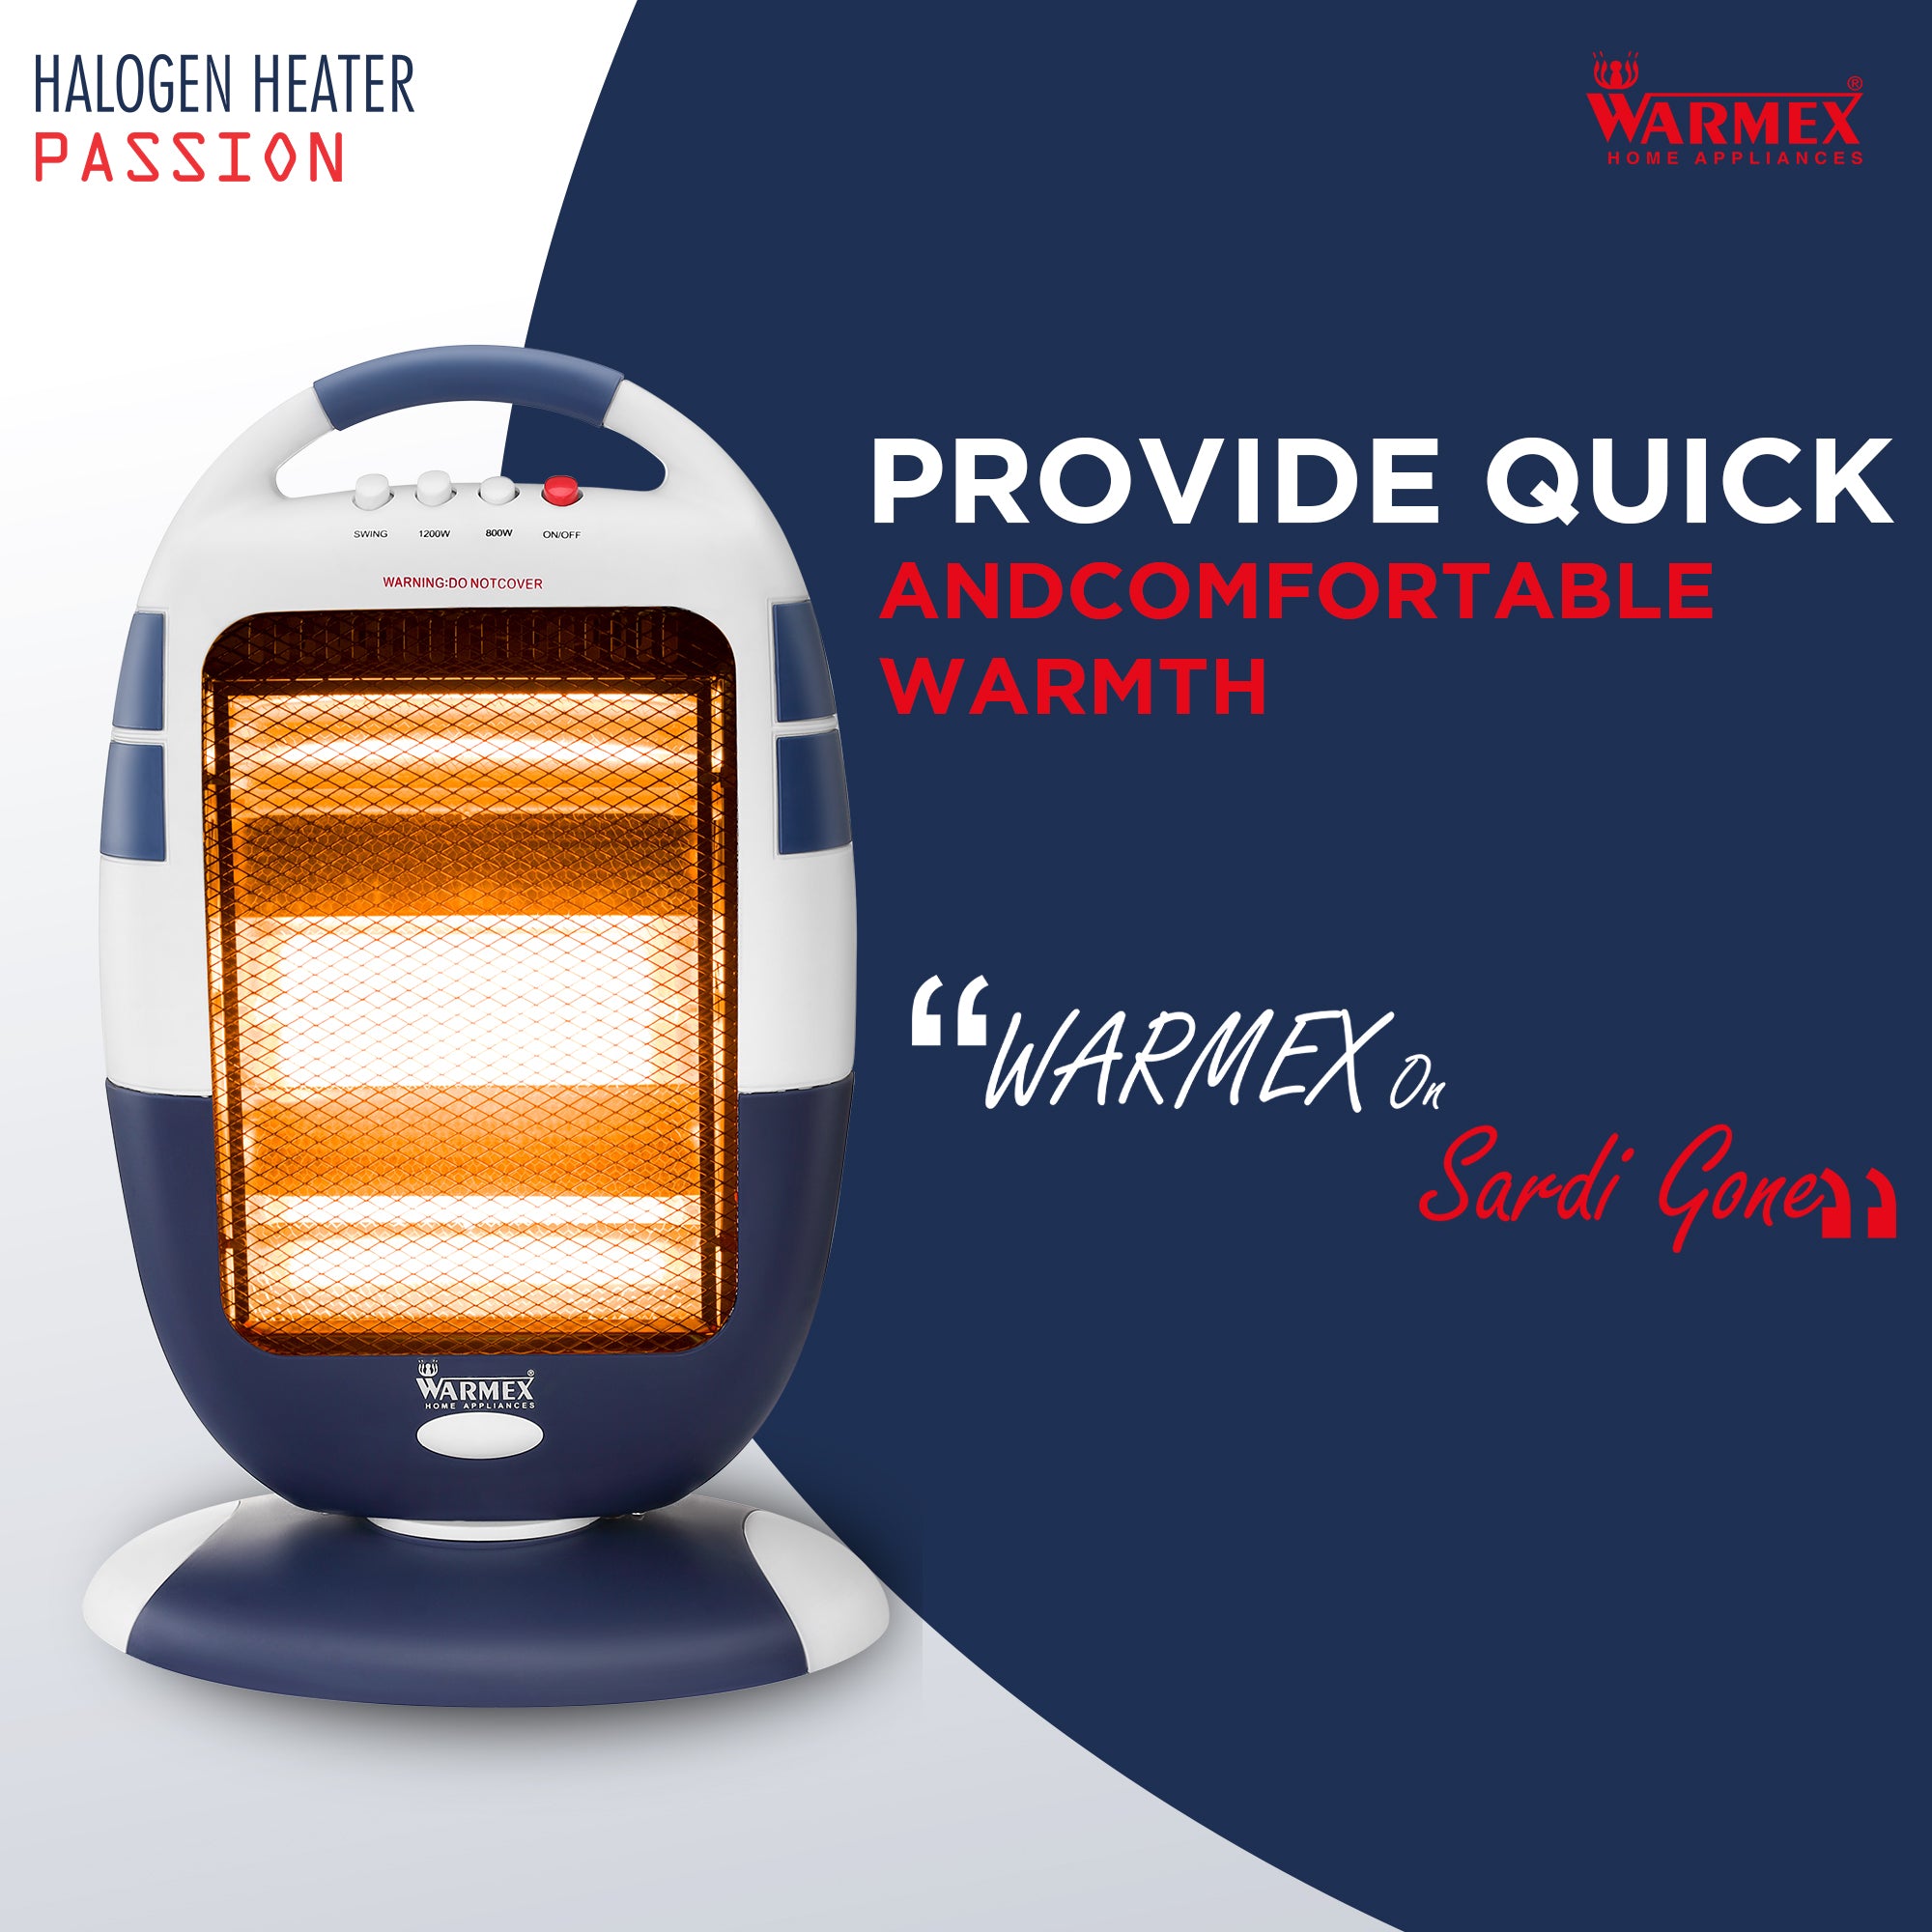 Warmex 400/800/1200 Watts Halogen Room Heater PASSION